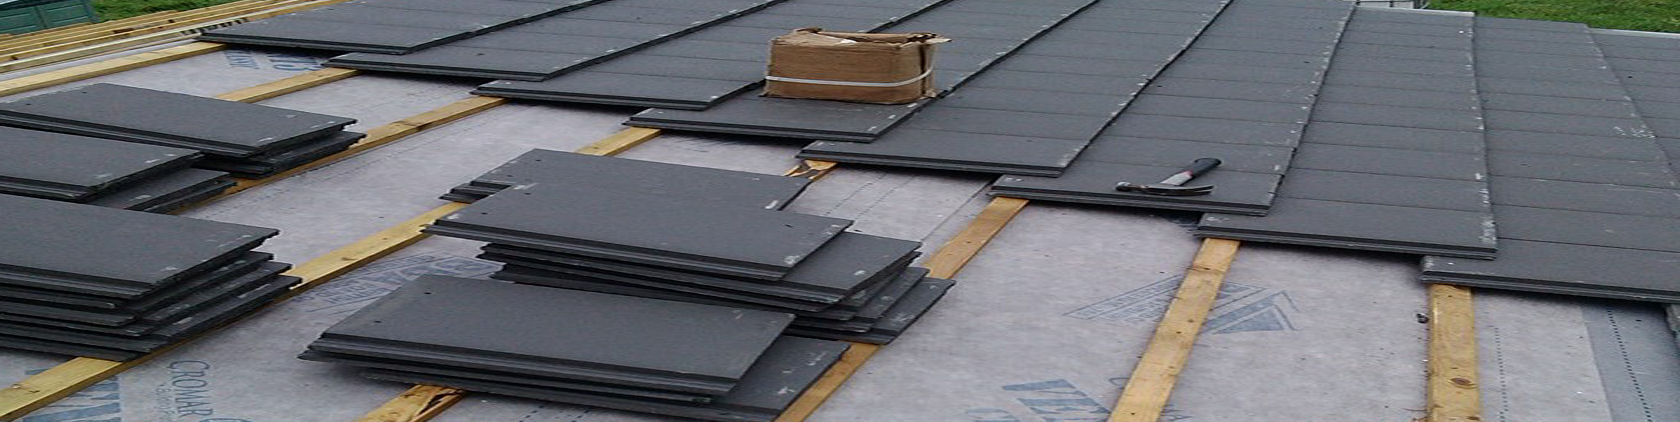 roof tiling